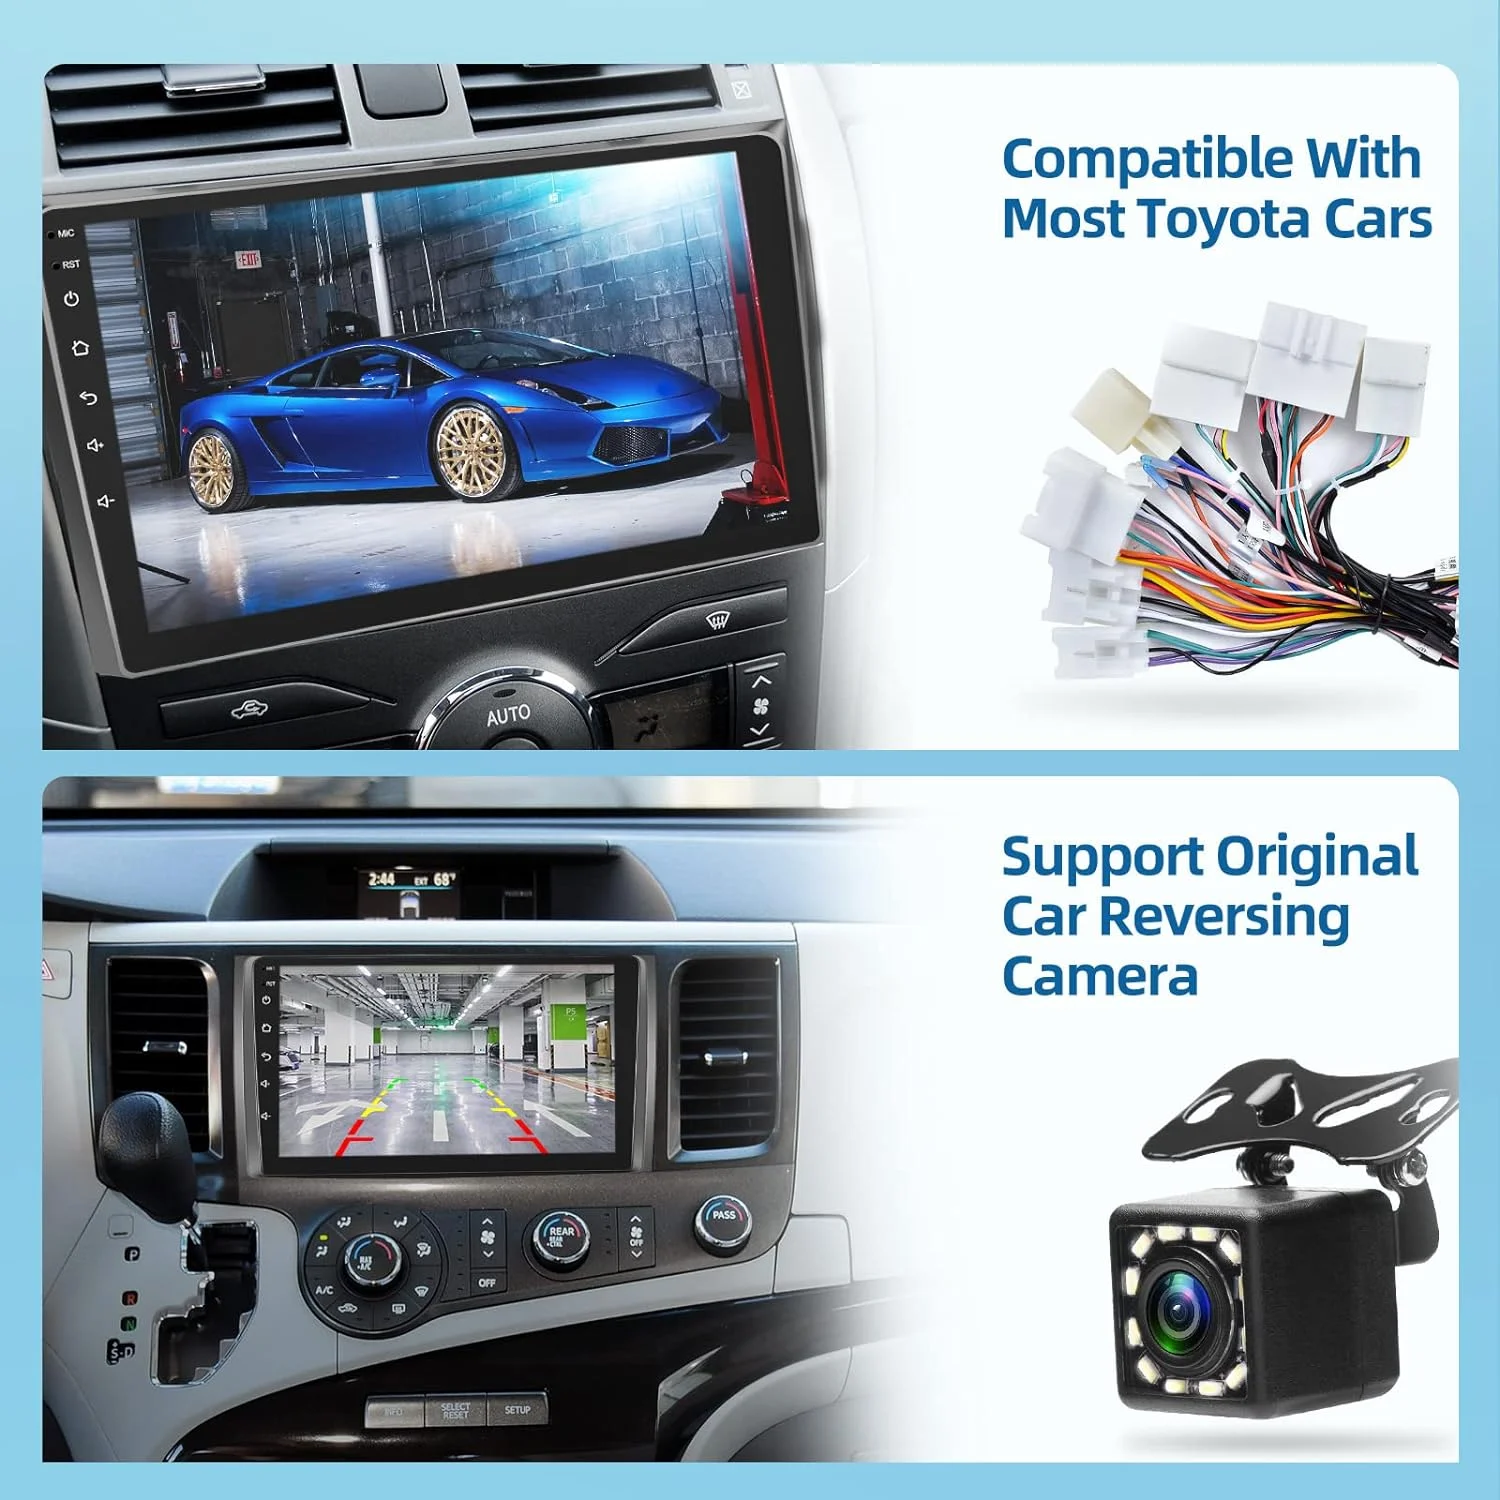 JBL postroj adaptér pro Toyota auto stereo 16 špendlík rádio drát postroj s canbus kompatibilní s Toyota camry koruna květu RAV4 prado